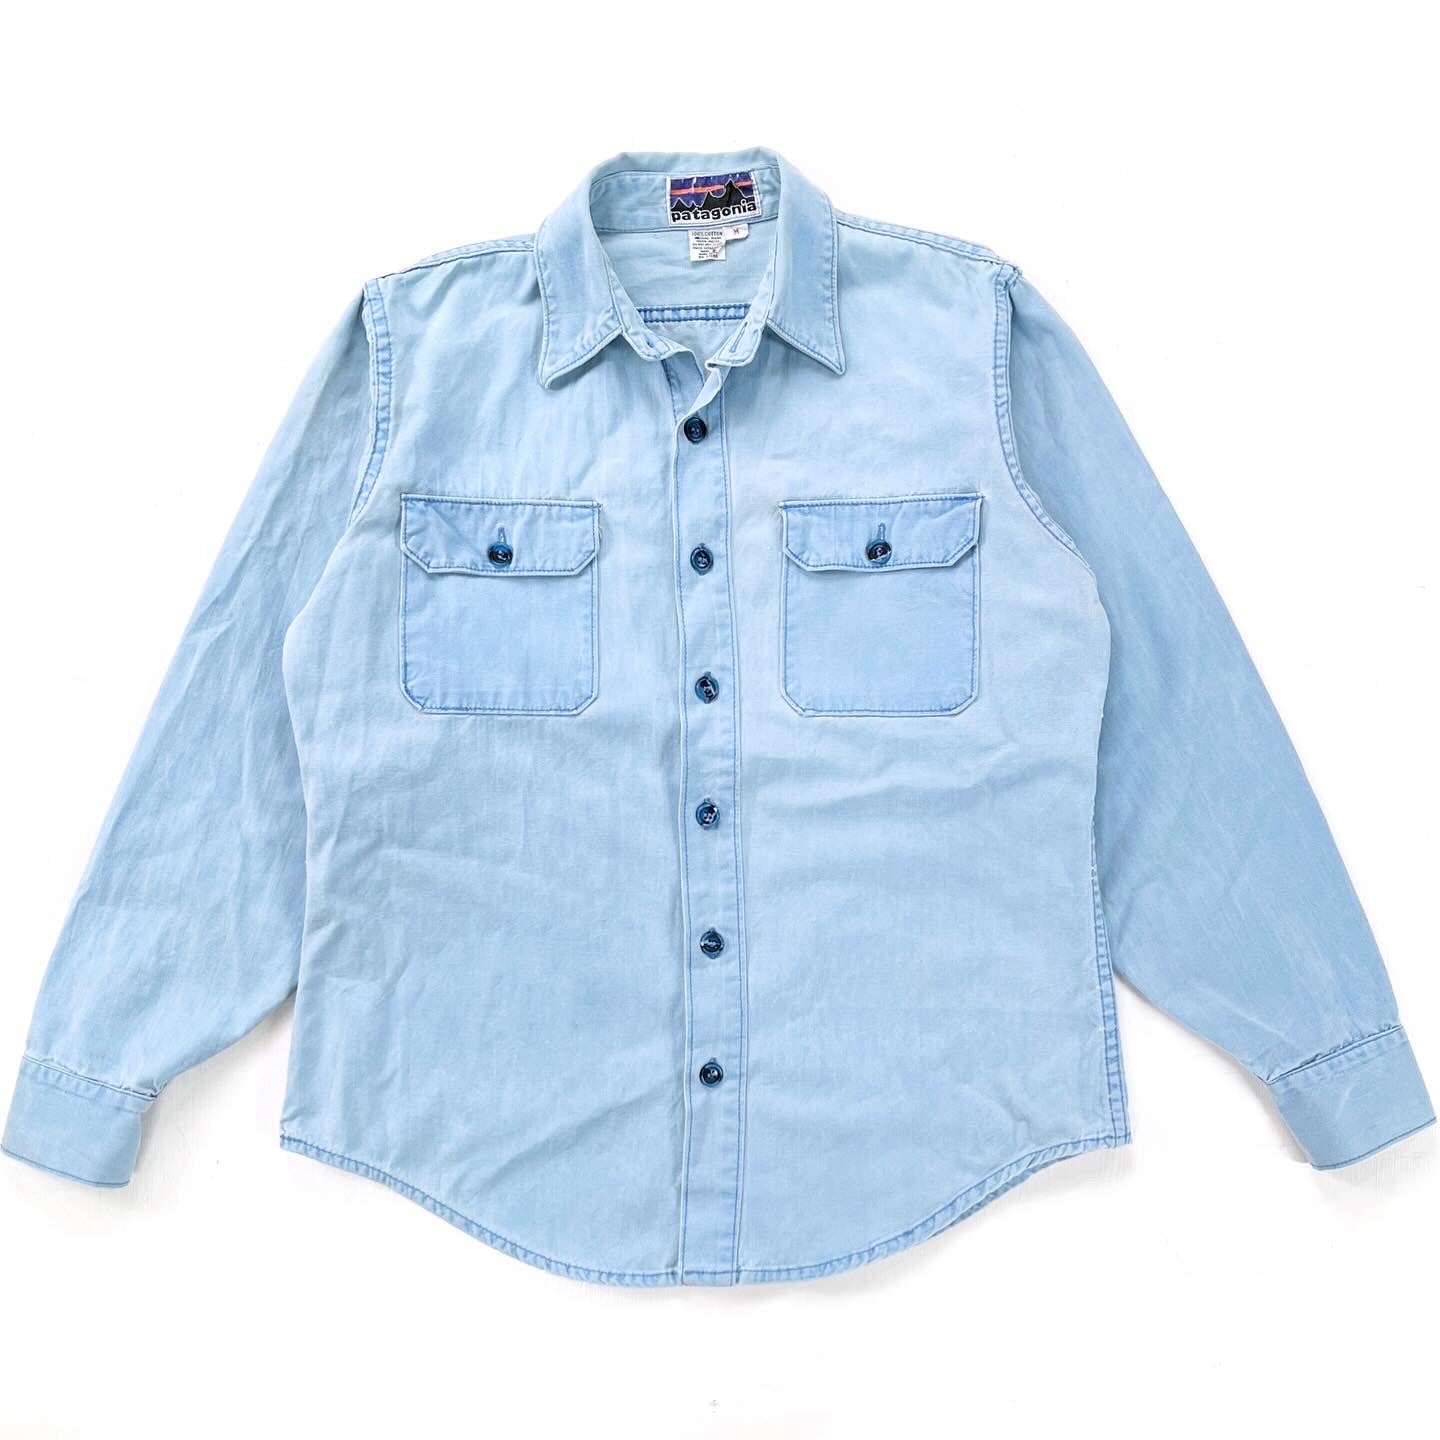 1970s Patagonia “Big Label” Cotton Canvas Shirt, Light Blue (S/M)